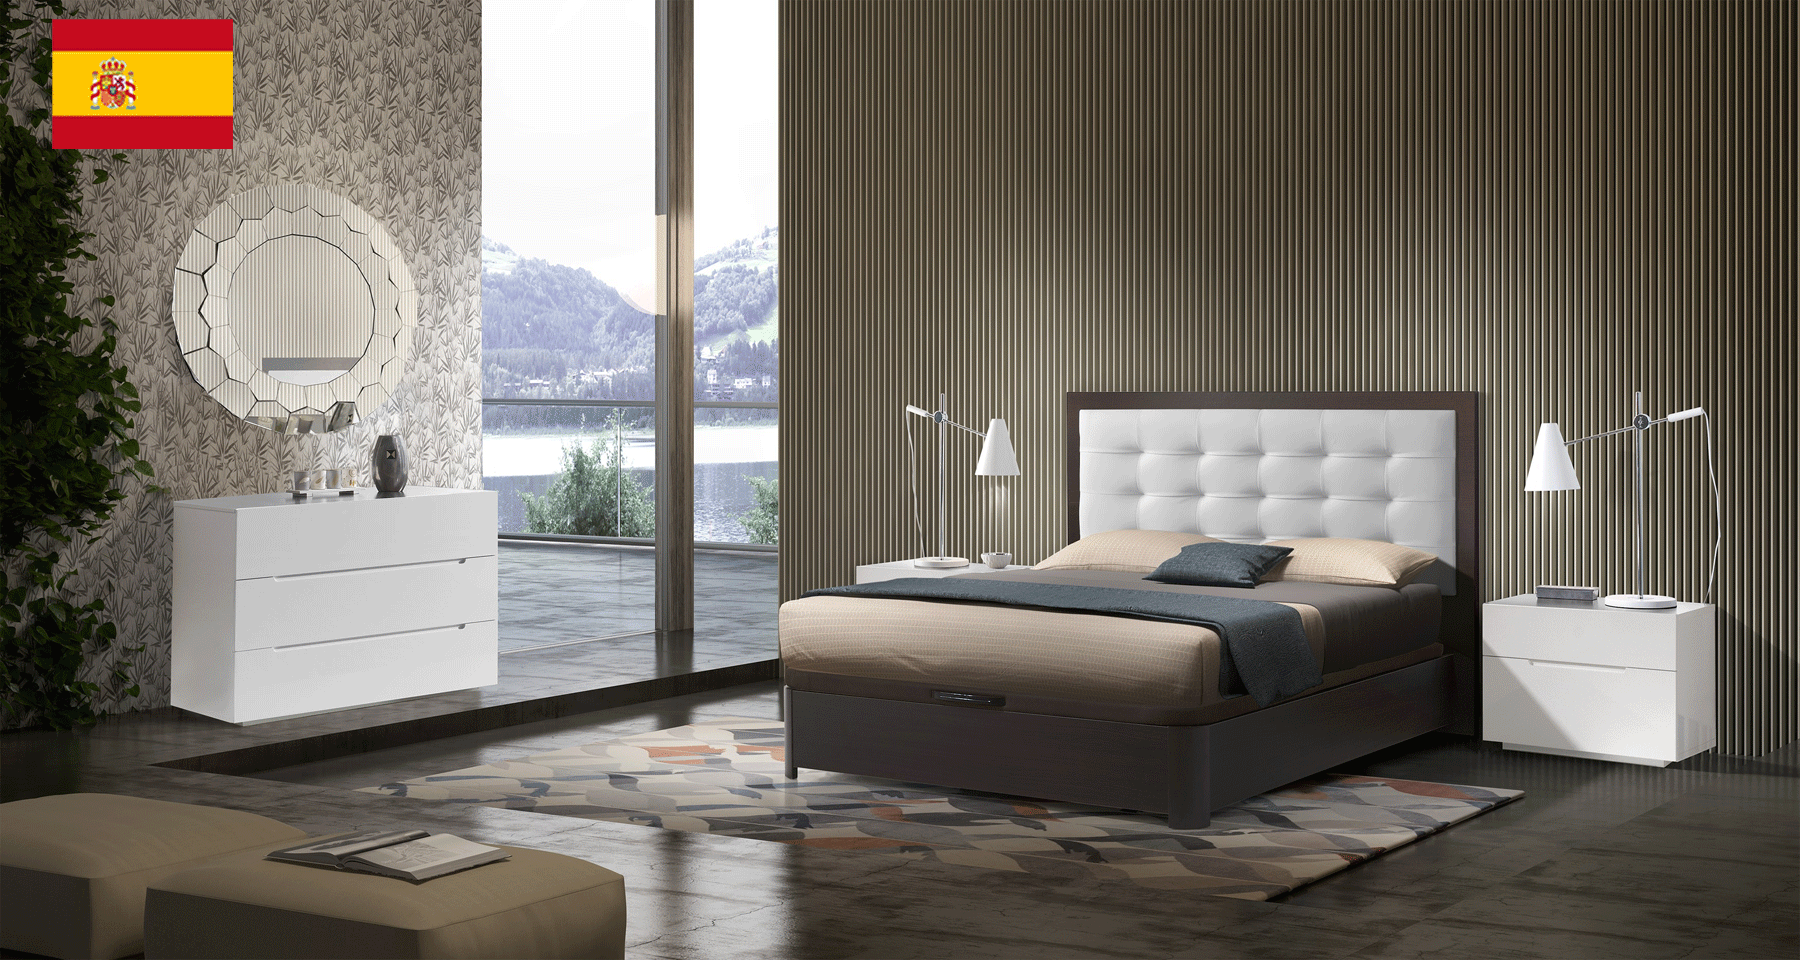 Bedroom Furniture Beds Regina Bedroom QS with Storage and M100, C100, E100 cases